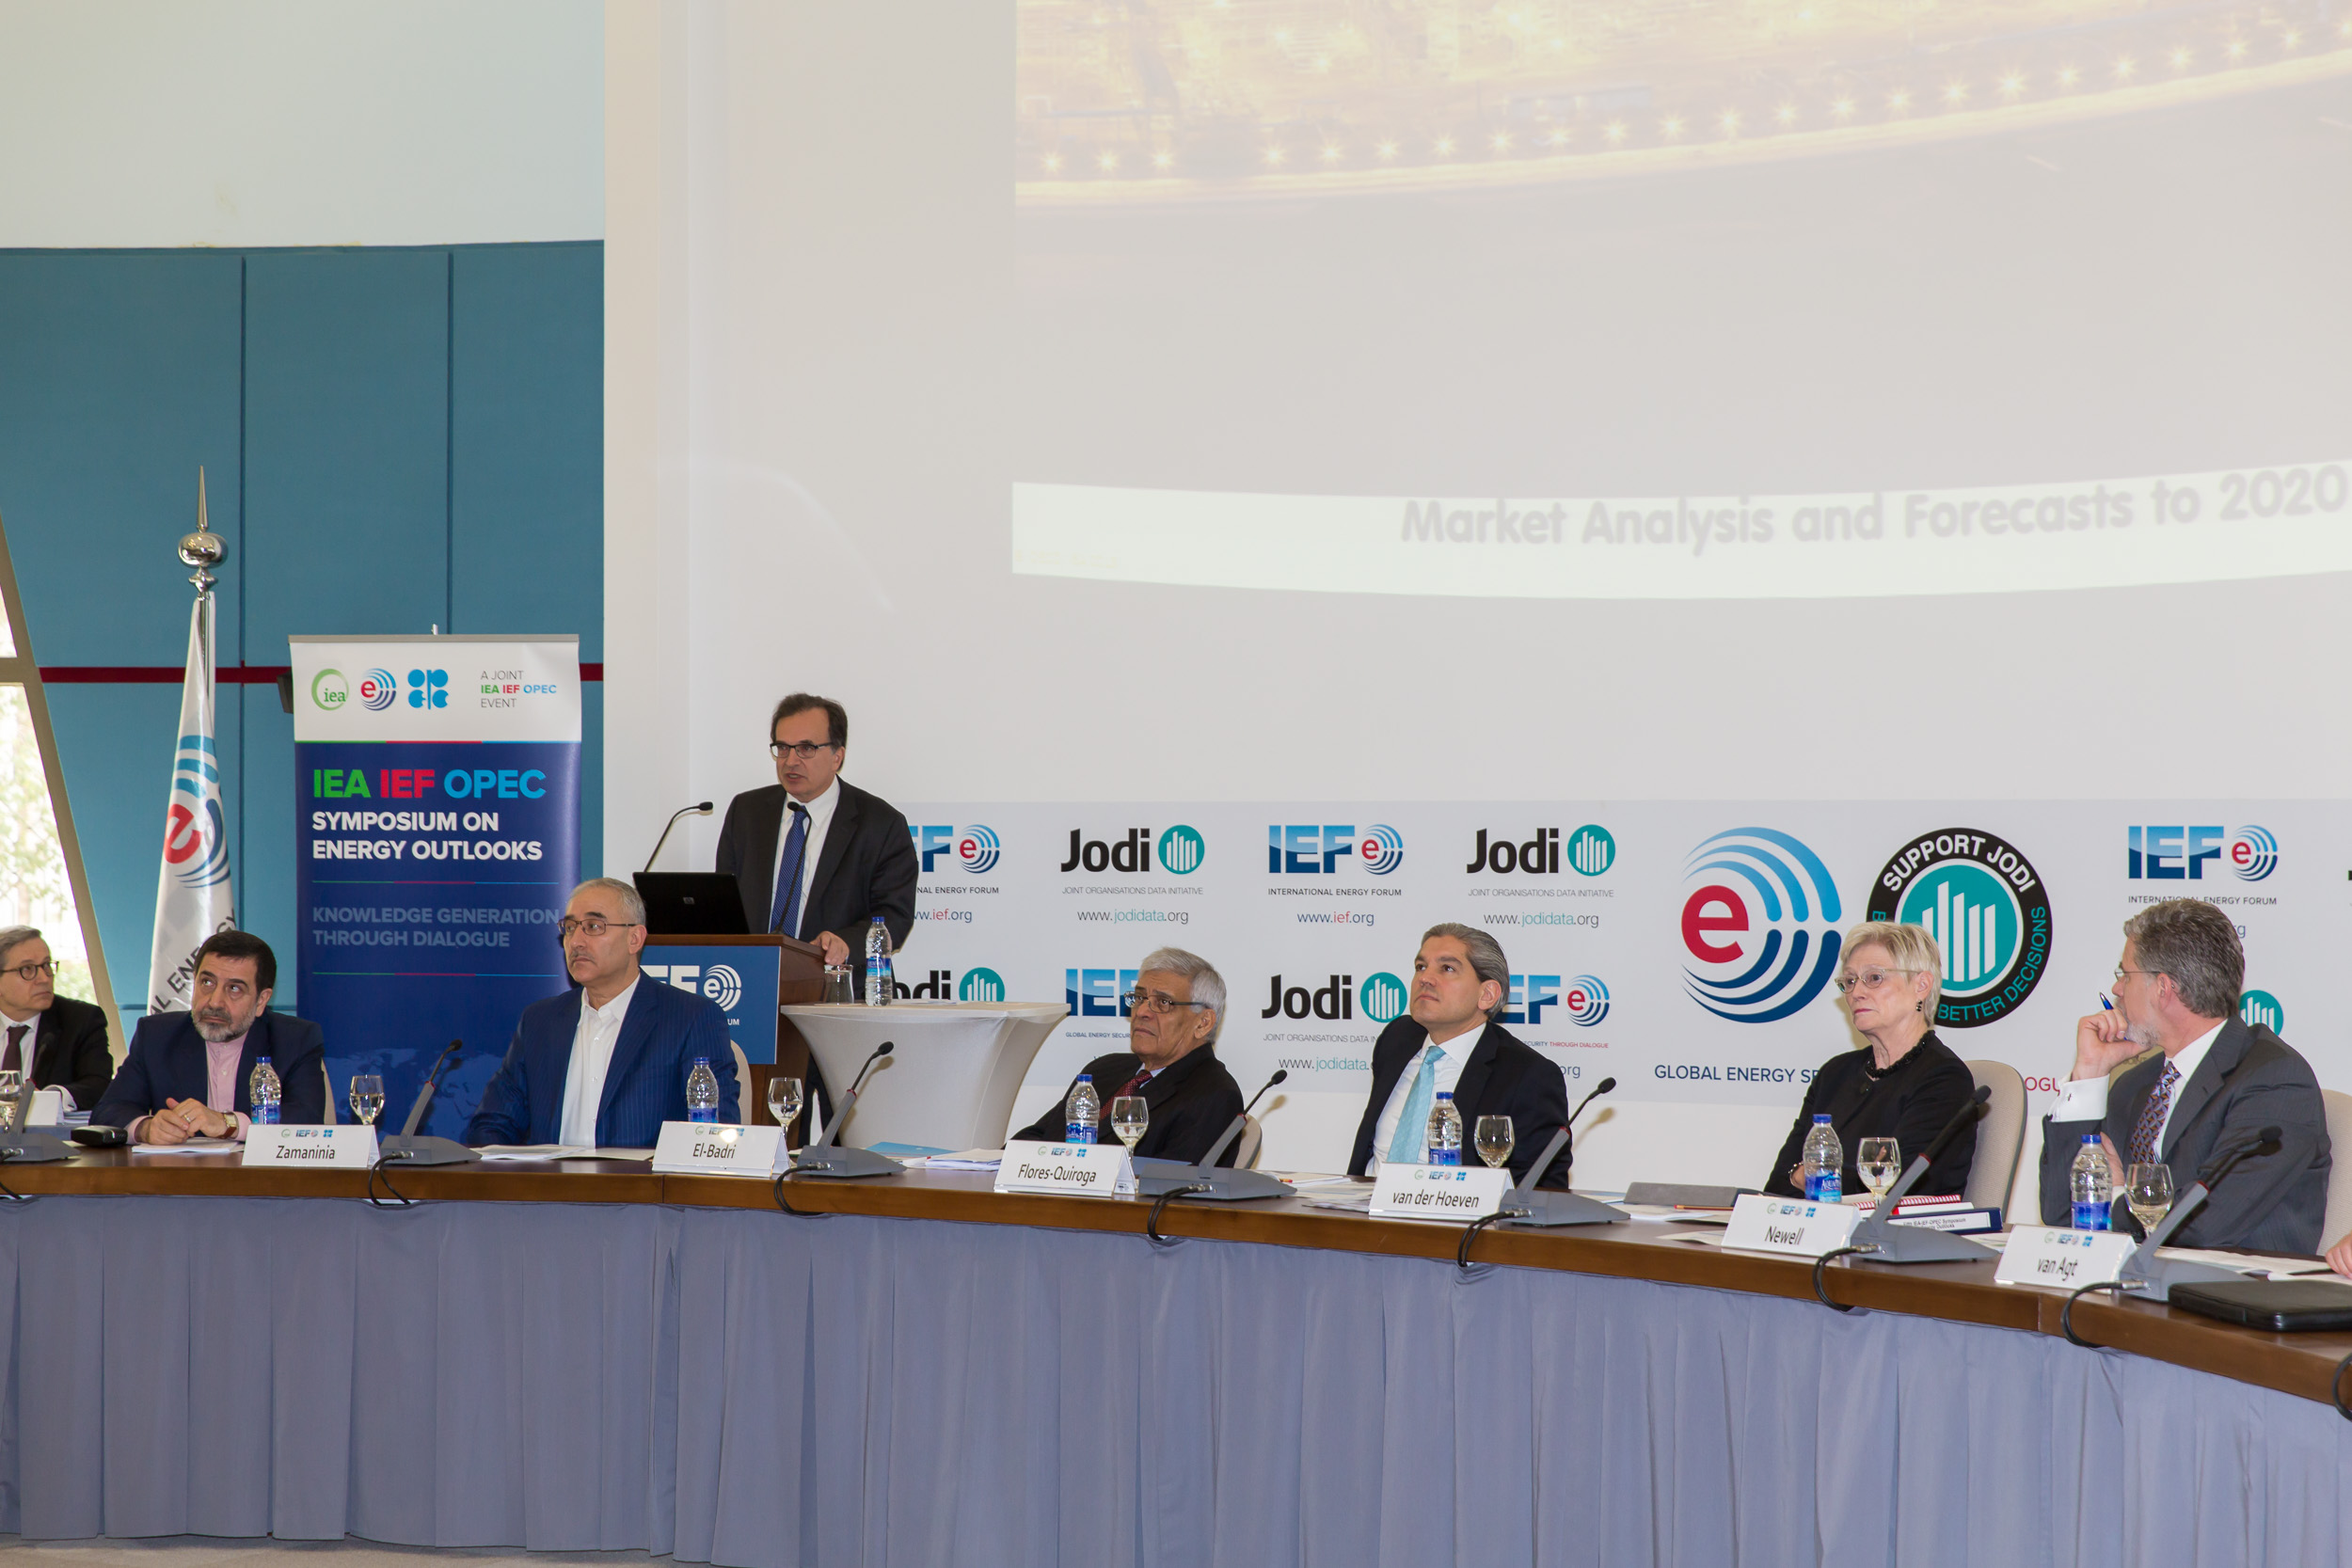 IEA IEF OPEC Symposium_21031